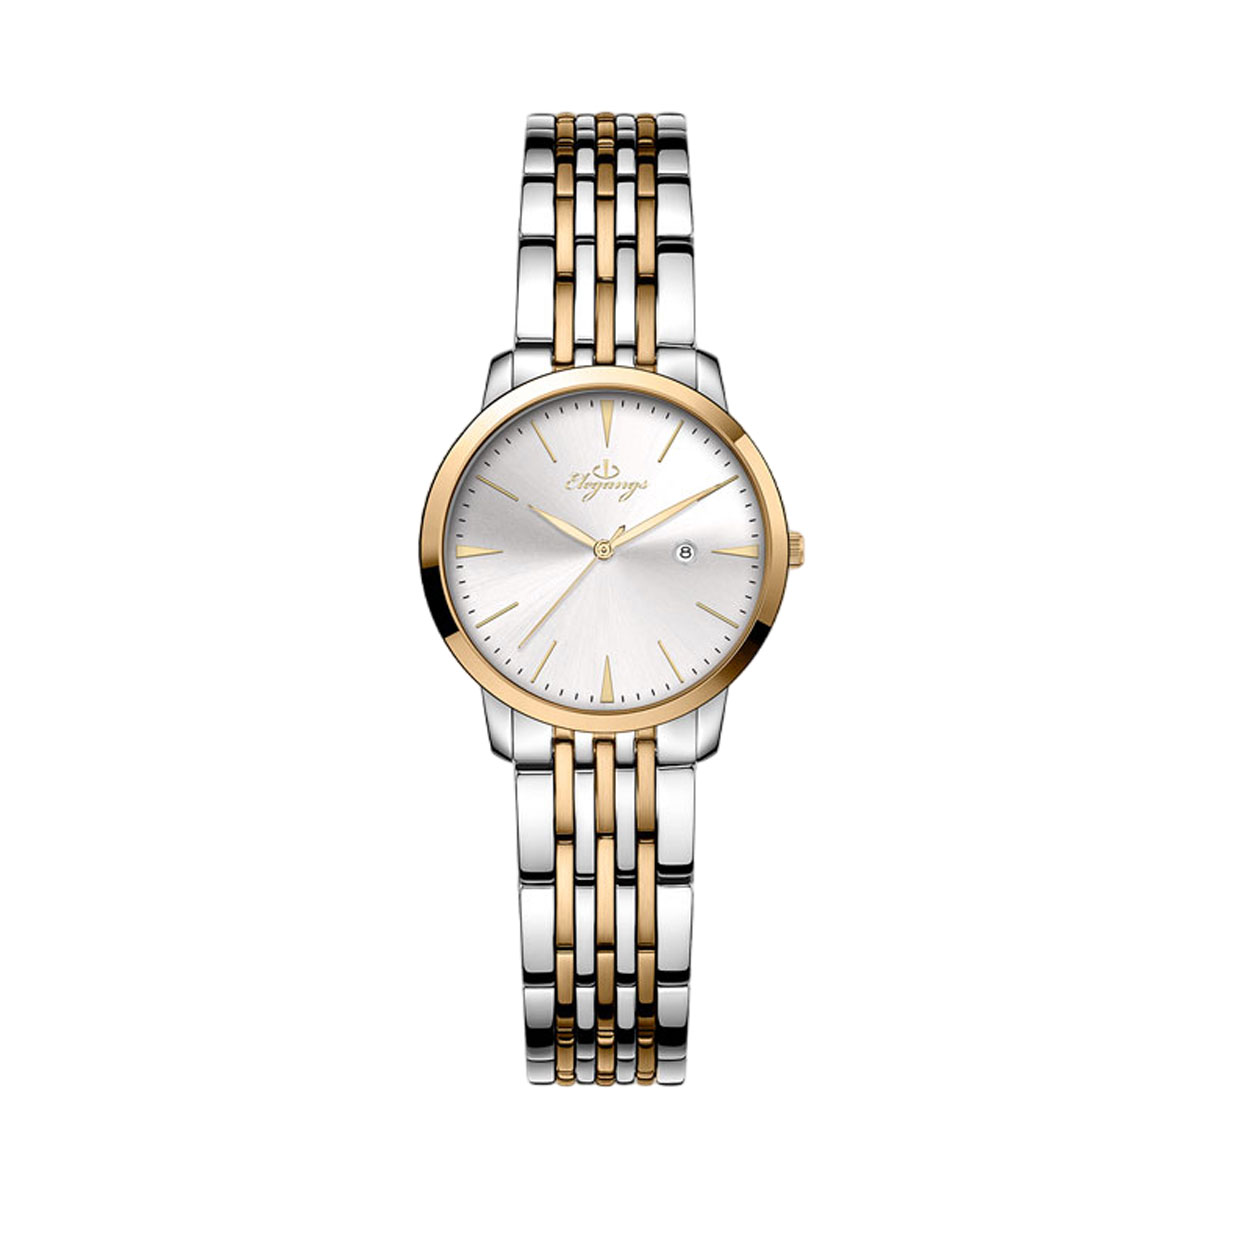 ساعت الگنگس مدل SP8209-107 زنانه